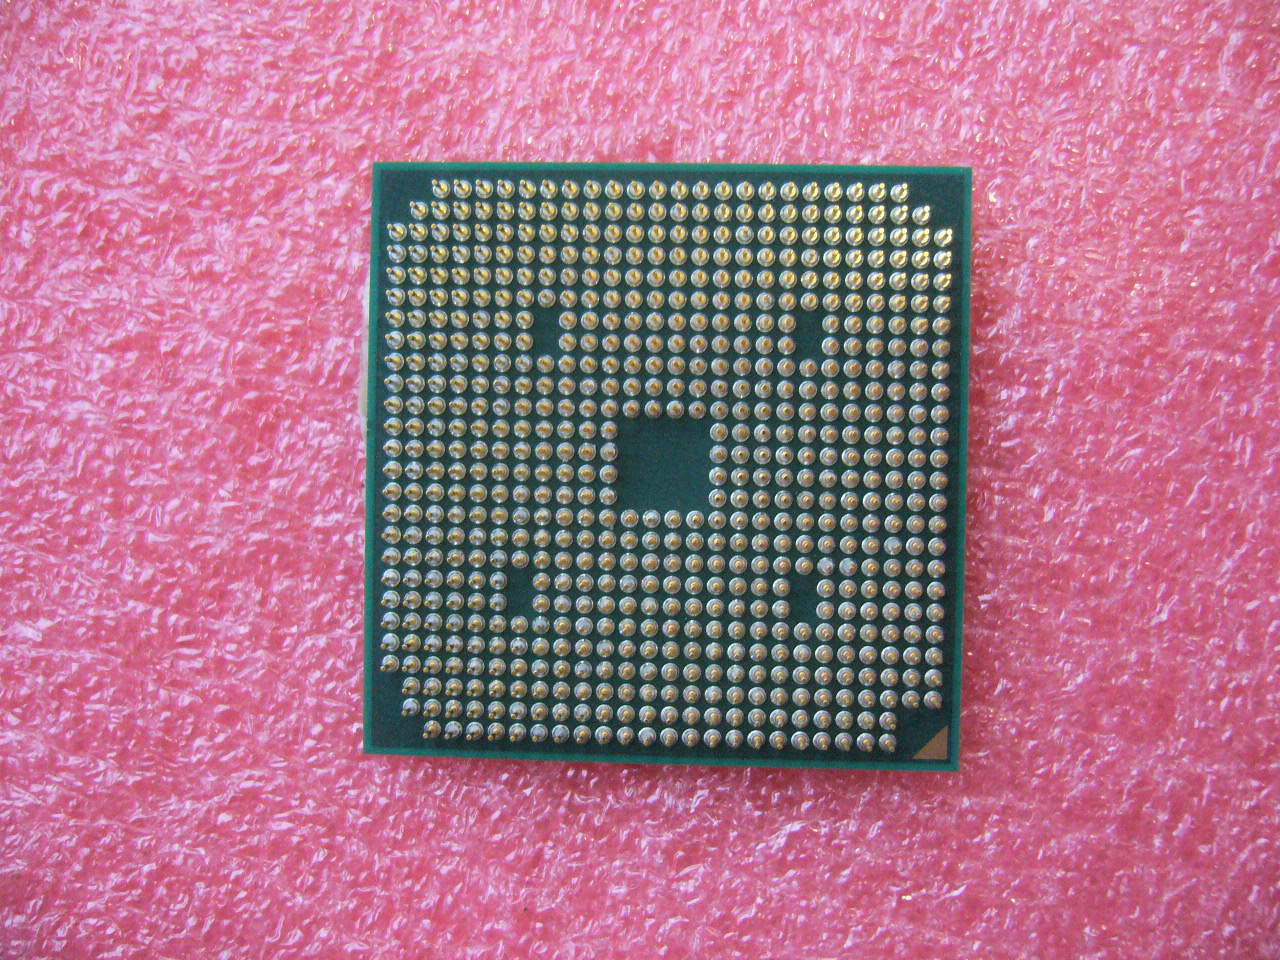 QTY 1x AMD Athlon II P340 2.2GHz Dual-Core (AMP340SGR22GM) Laptop CPU Socket S1 - Click Image to Close